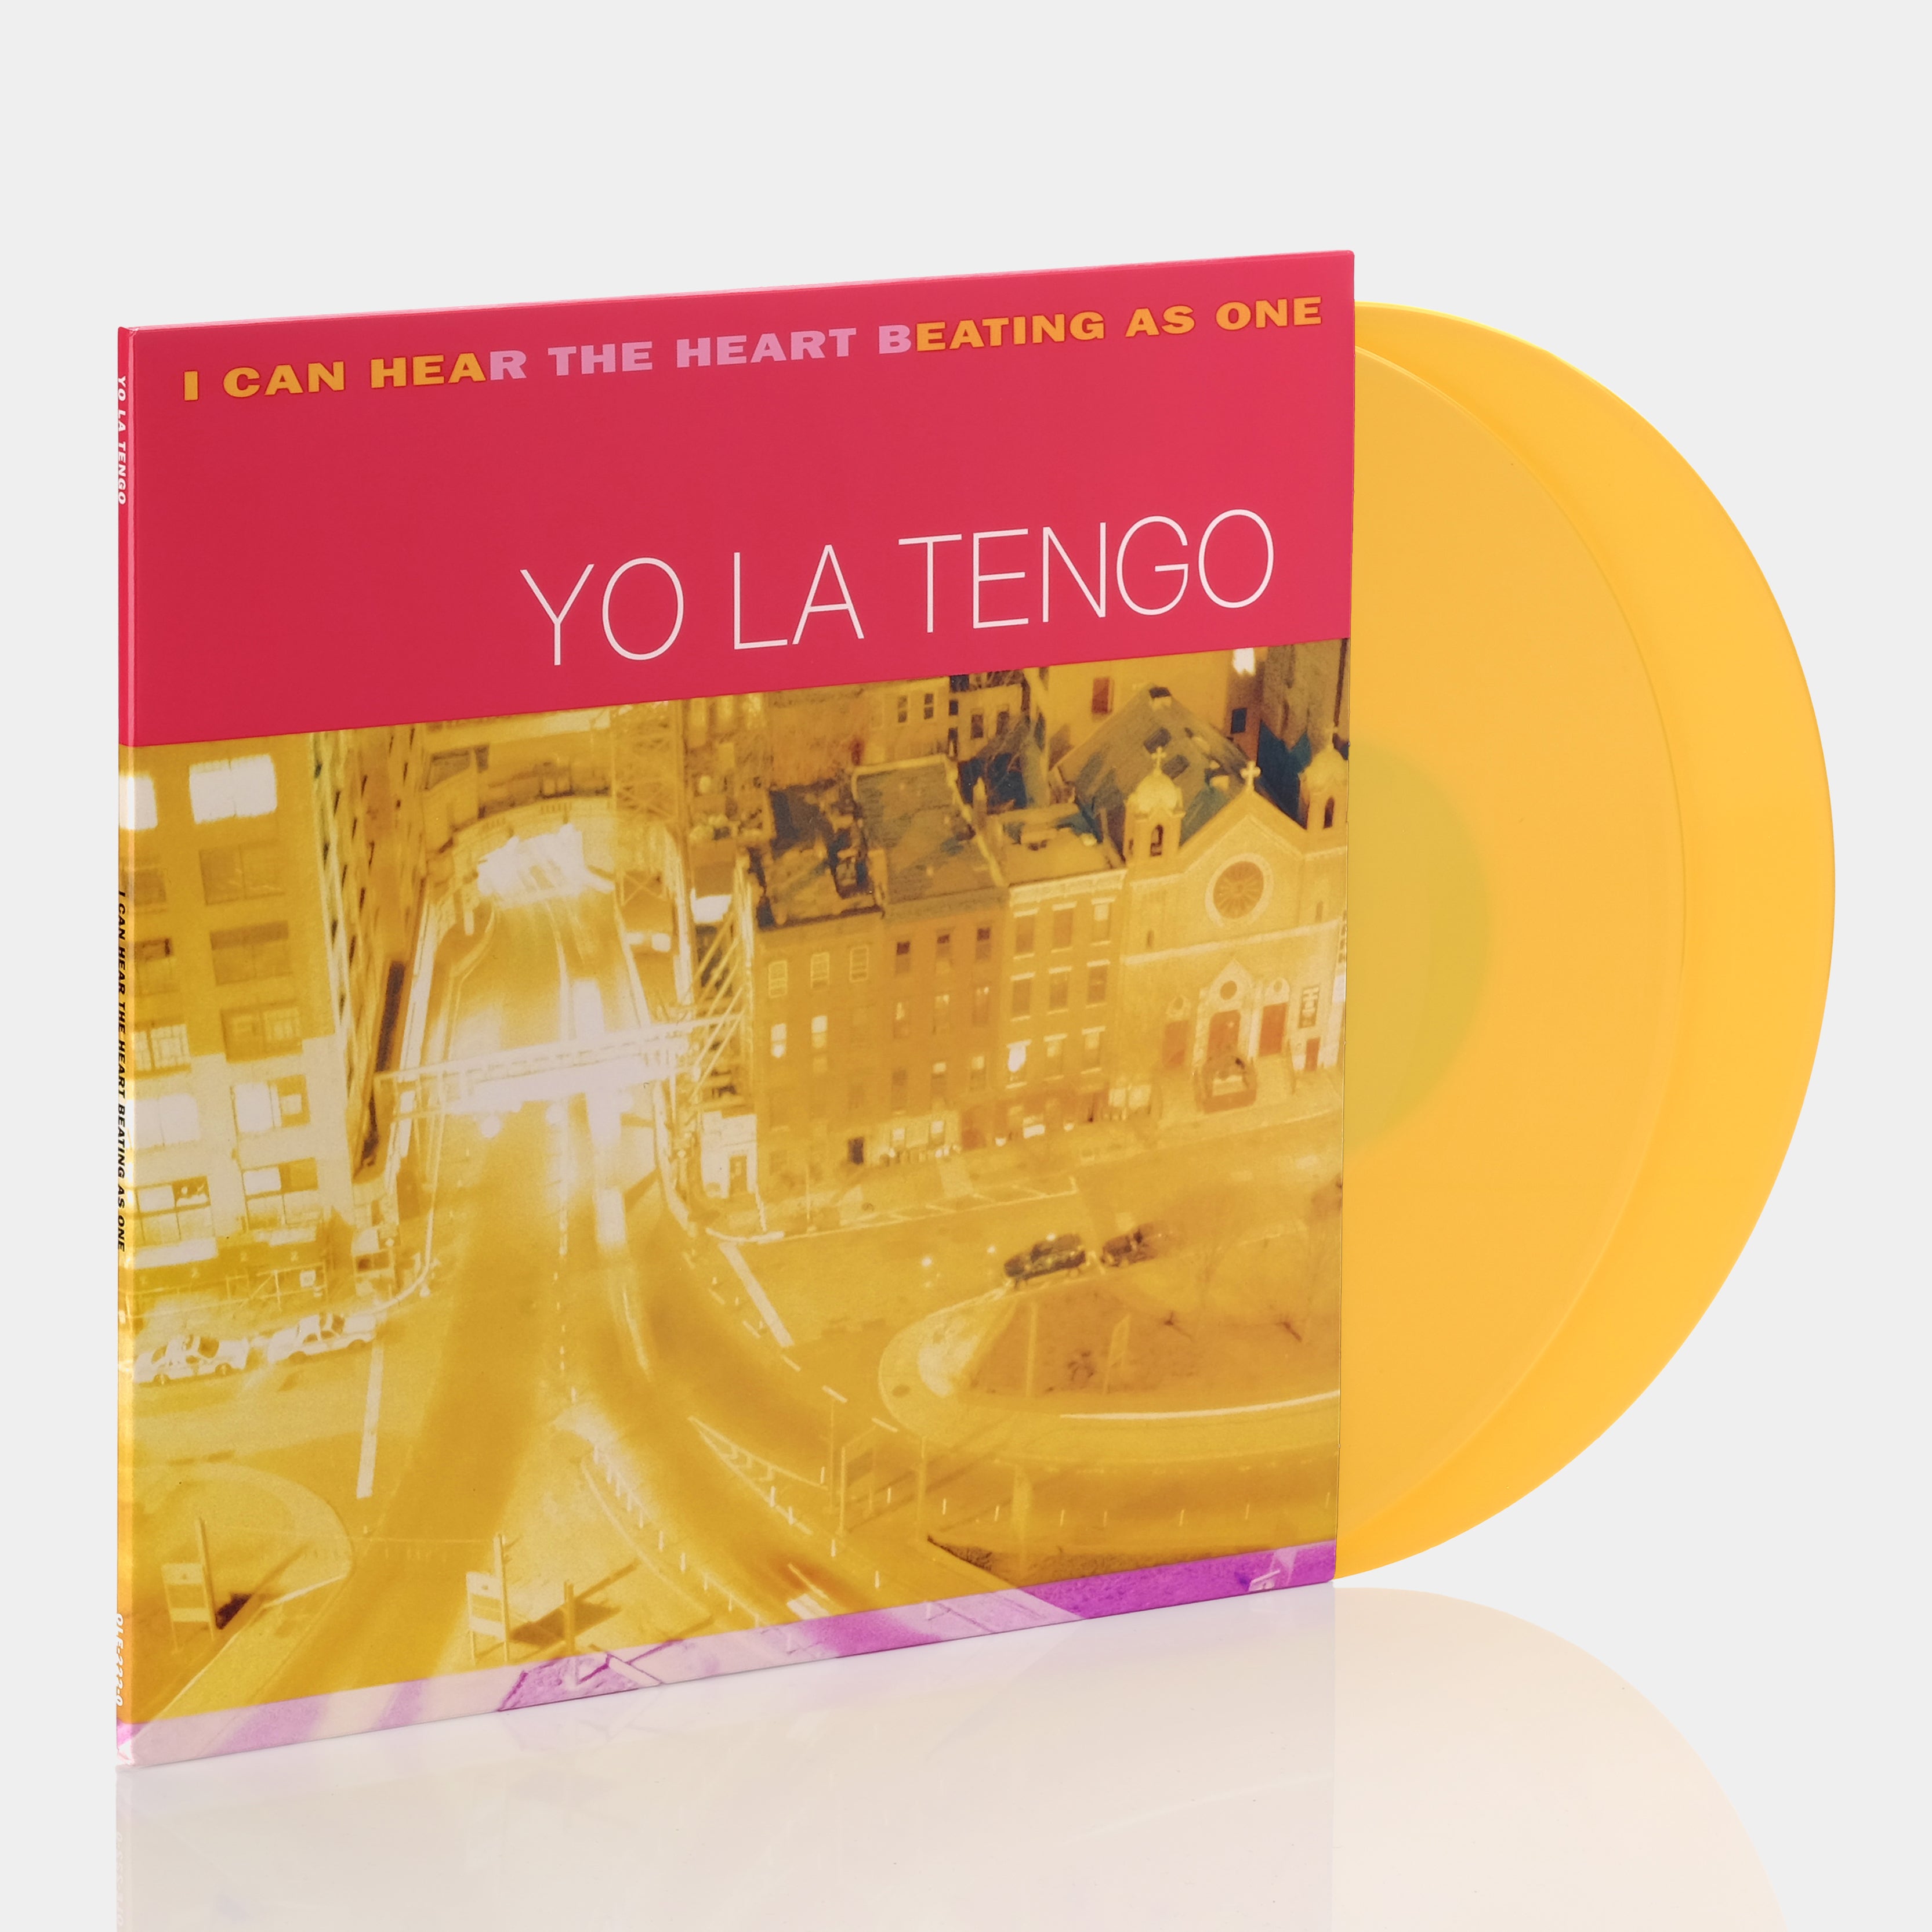 Yo La Tengo - I Can Hear The Heart Beating As One (25th Anniversary Pressing) 2xLP Yellow Vinyl Record